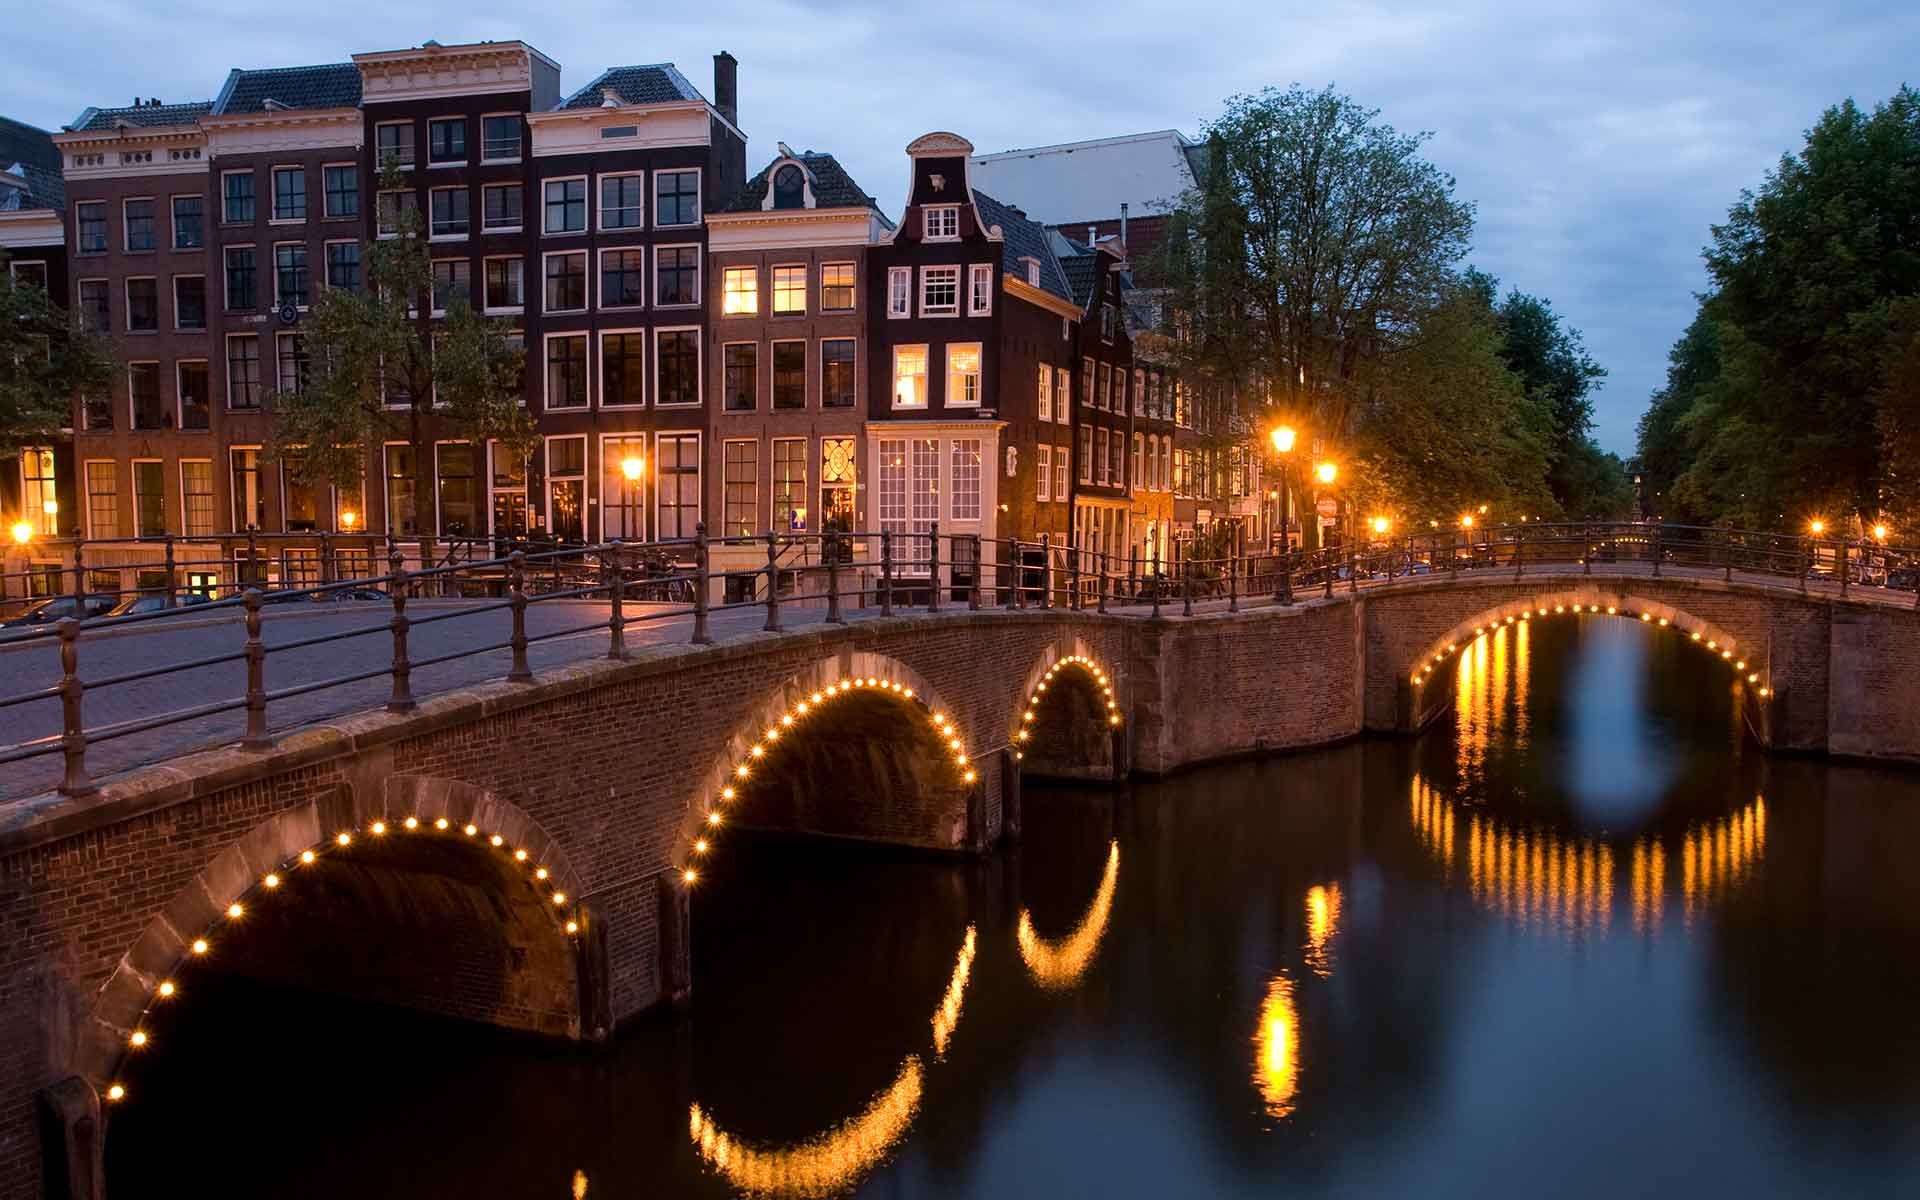 Boksen in Amsterdam